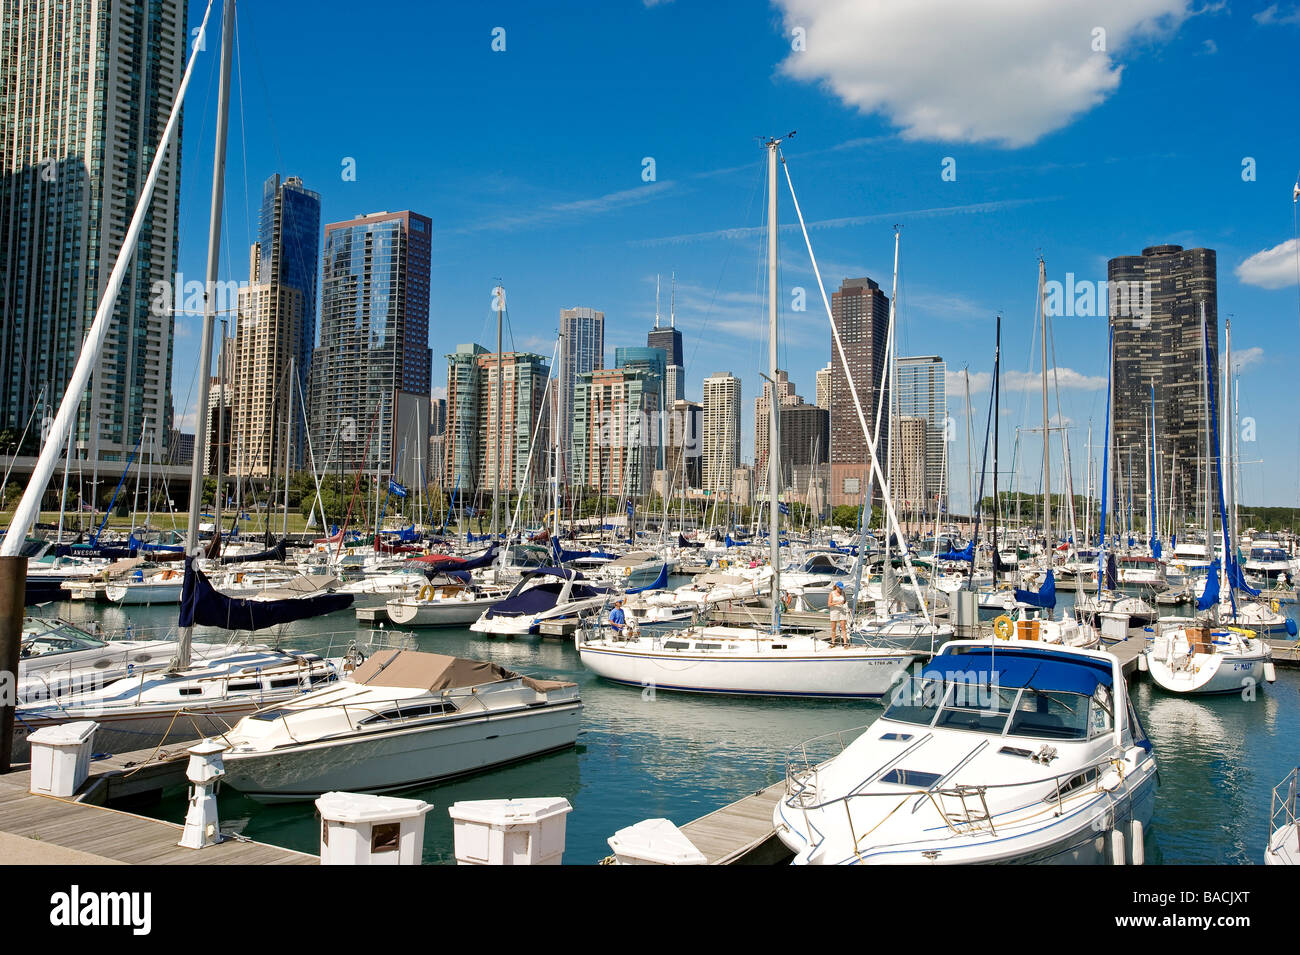 United States, Illinois, Chicago, Michigan Lake, marina Stock Photo